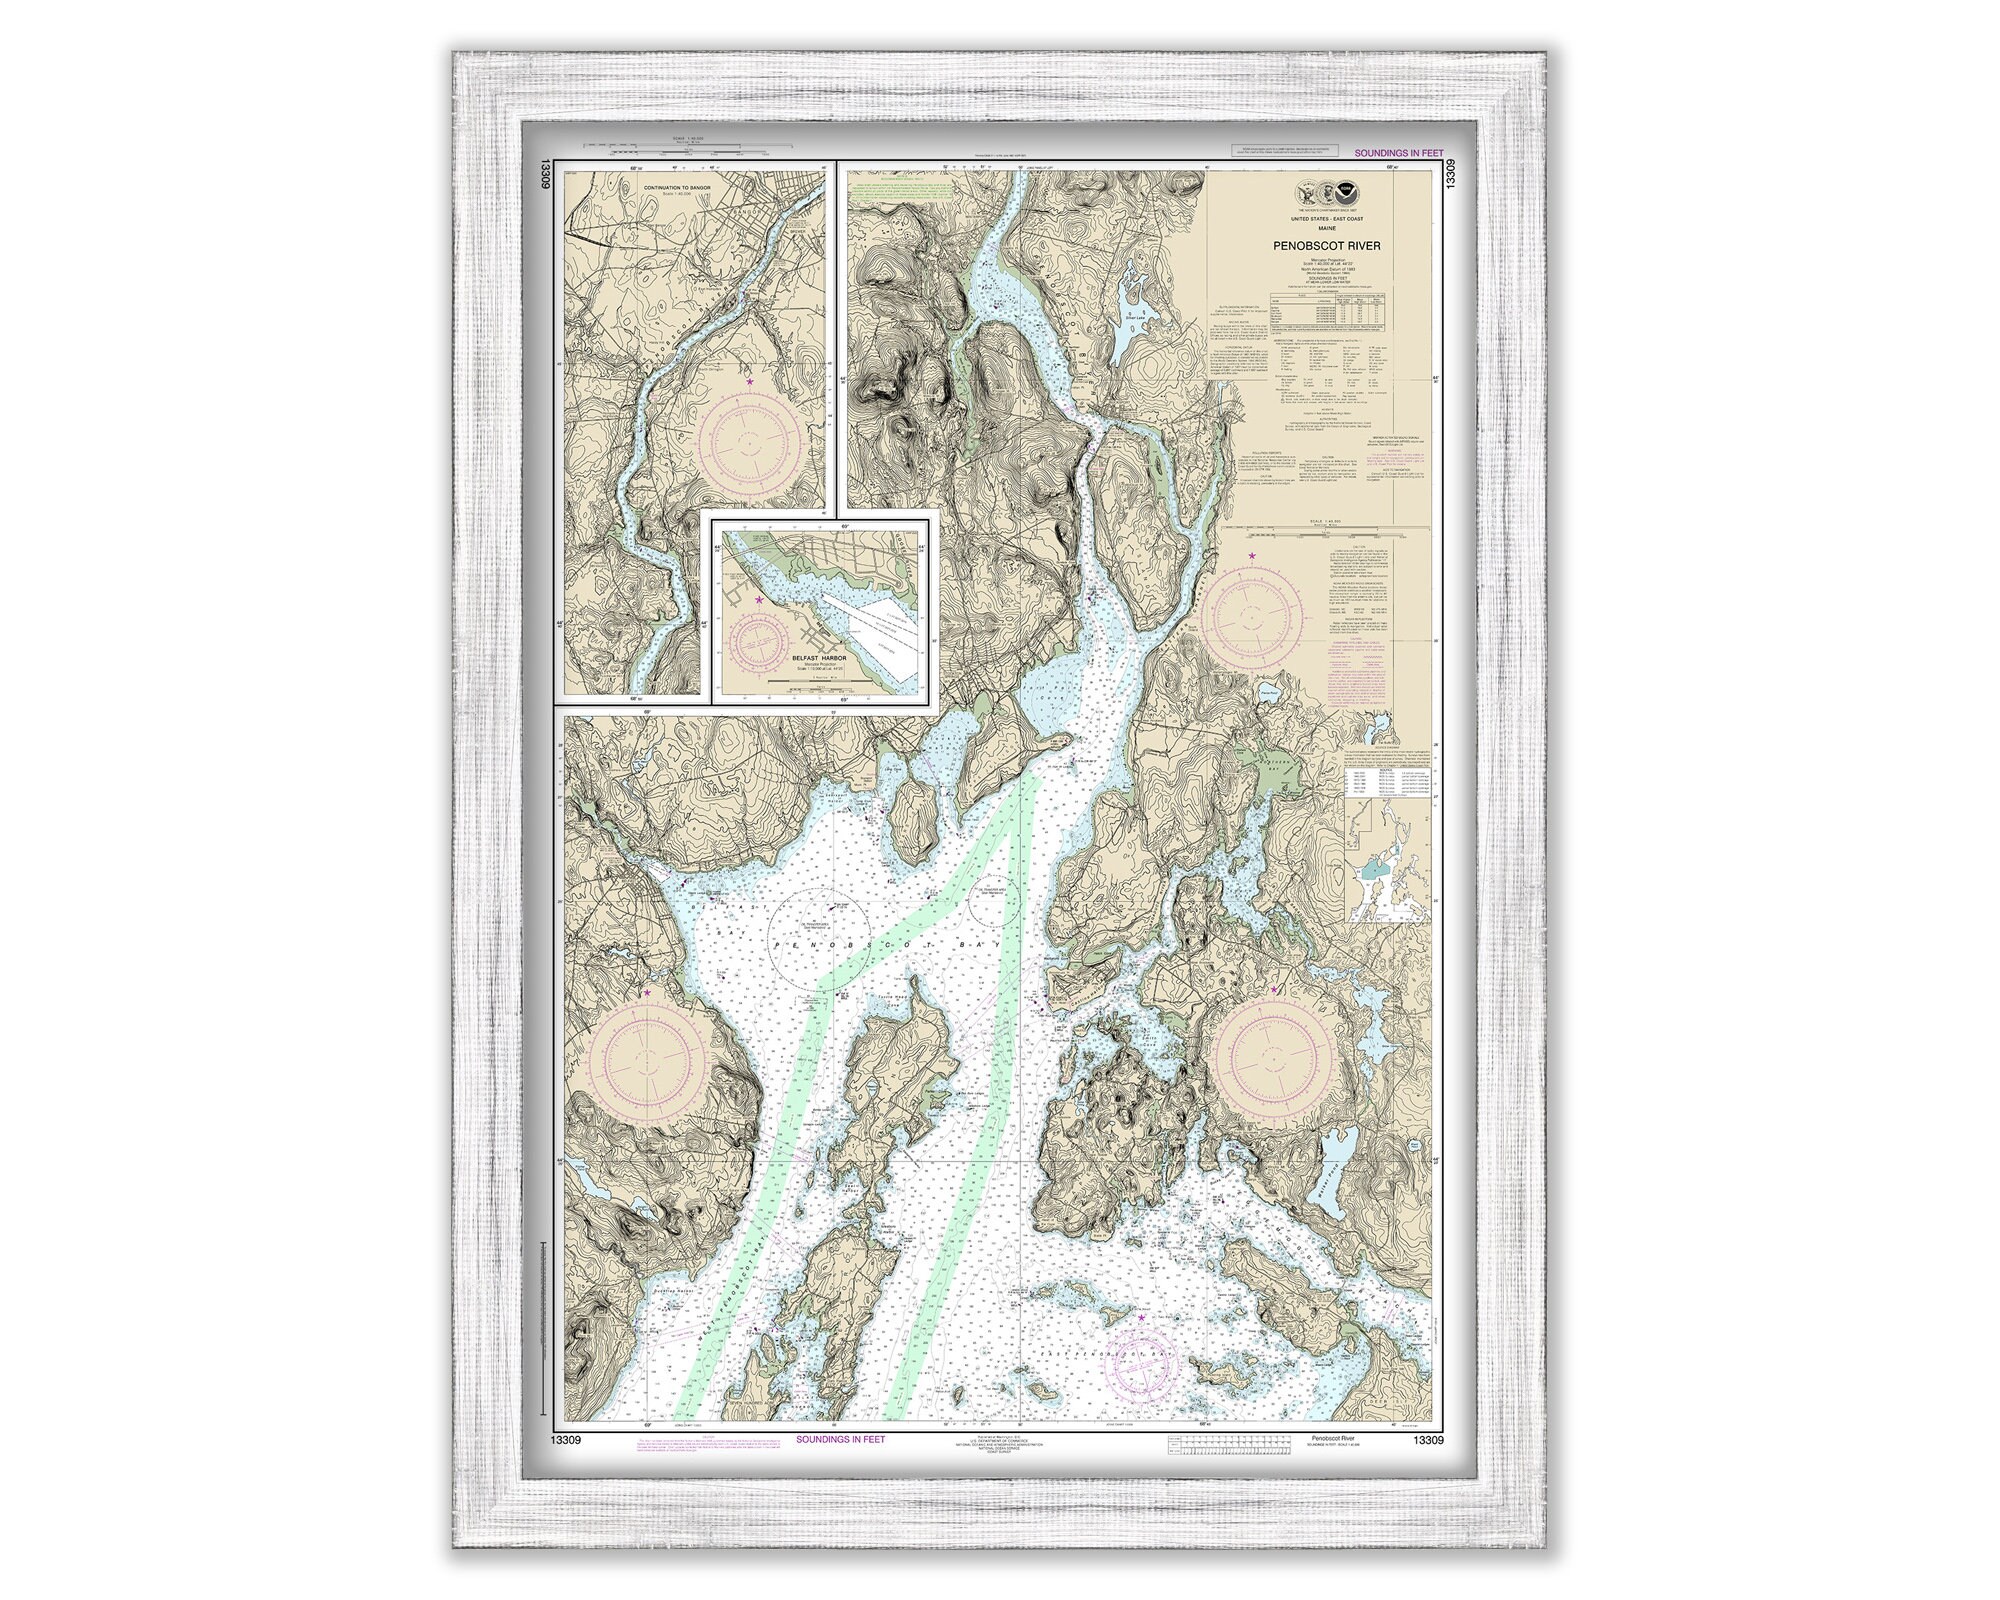 PENOBSCOT RIVER Maine Nautical Chart 2019